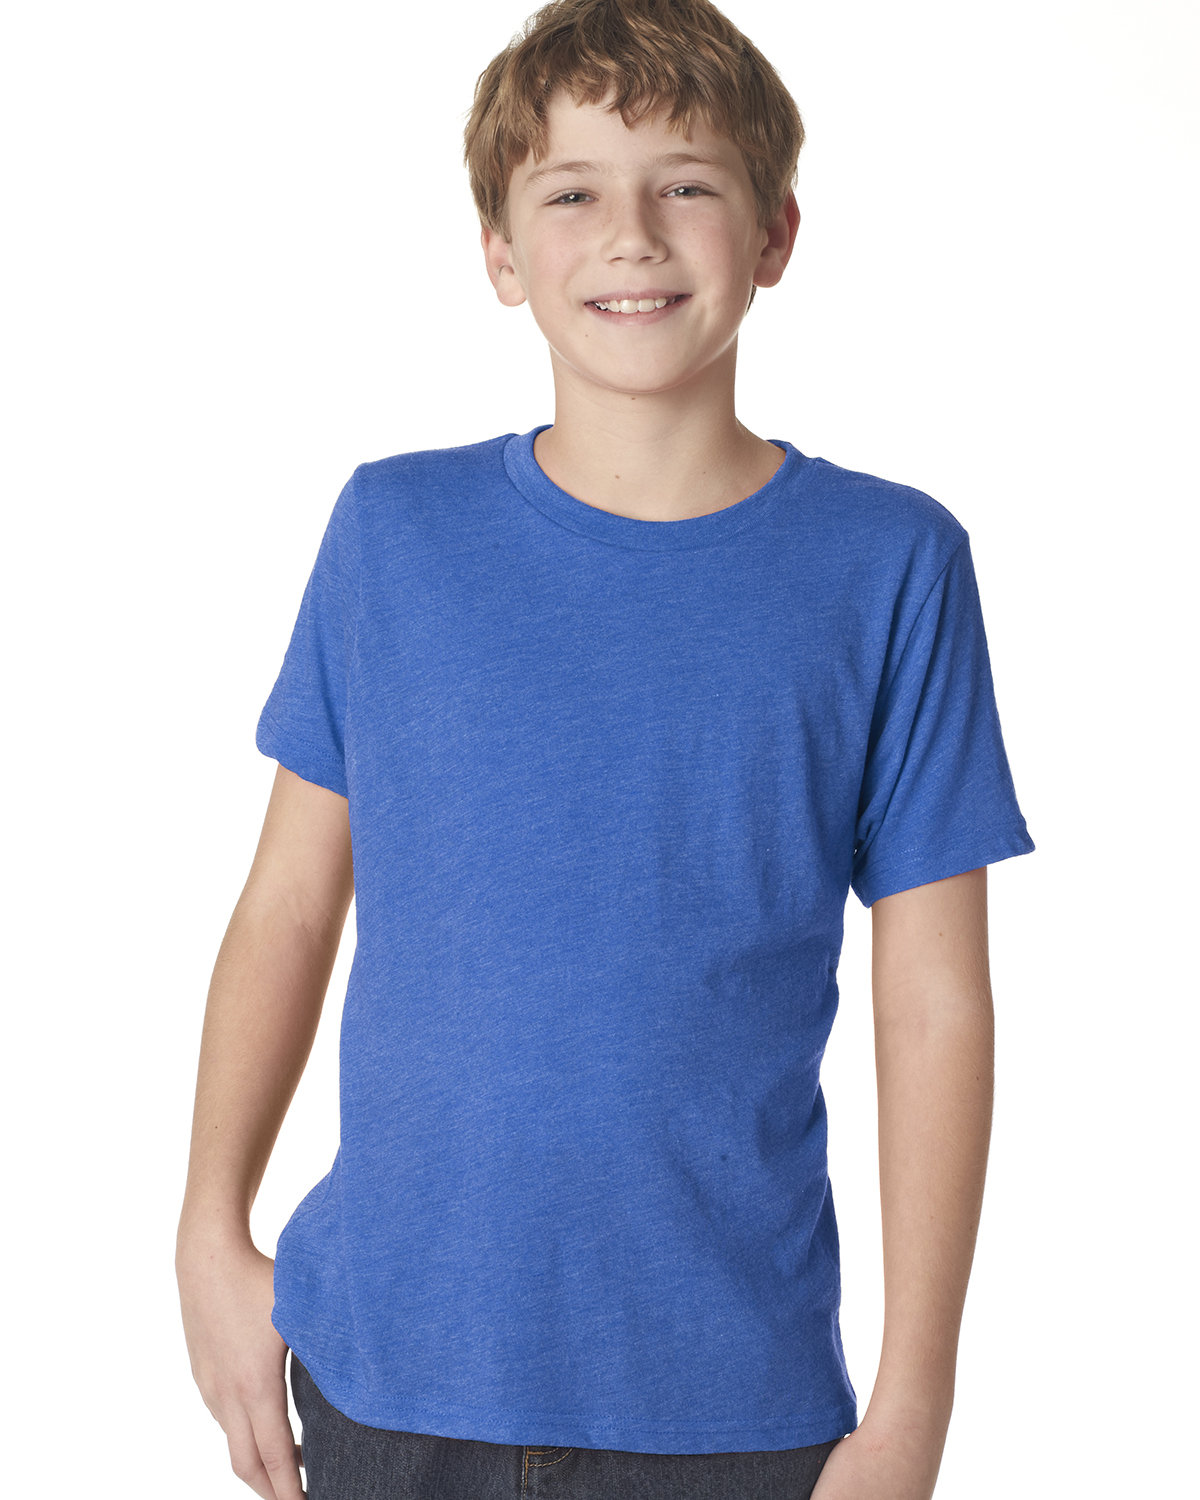 Next Level Boys Triblend Crewneck T-Shirt N6310